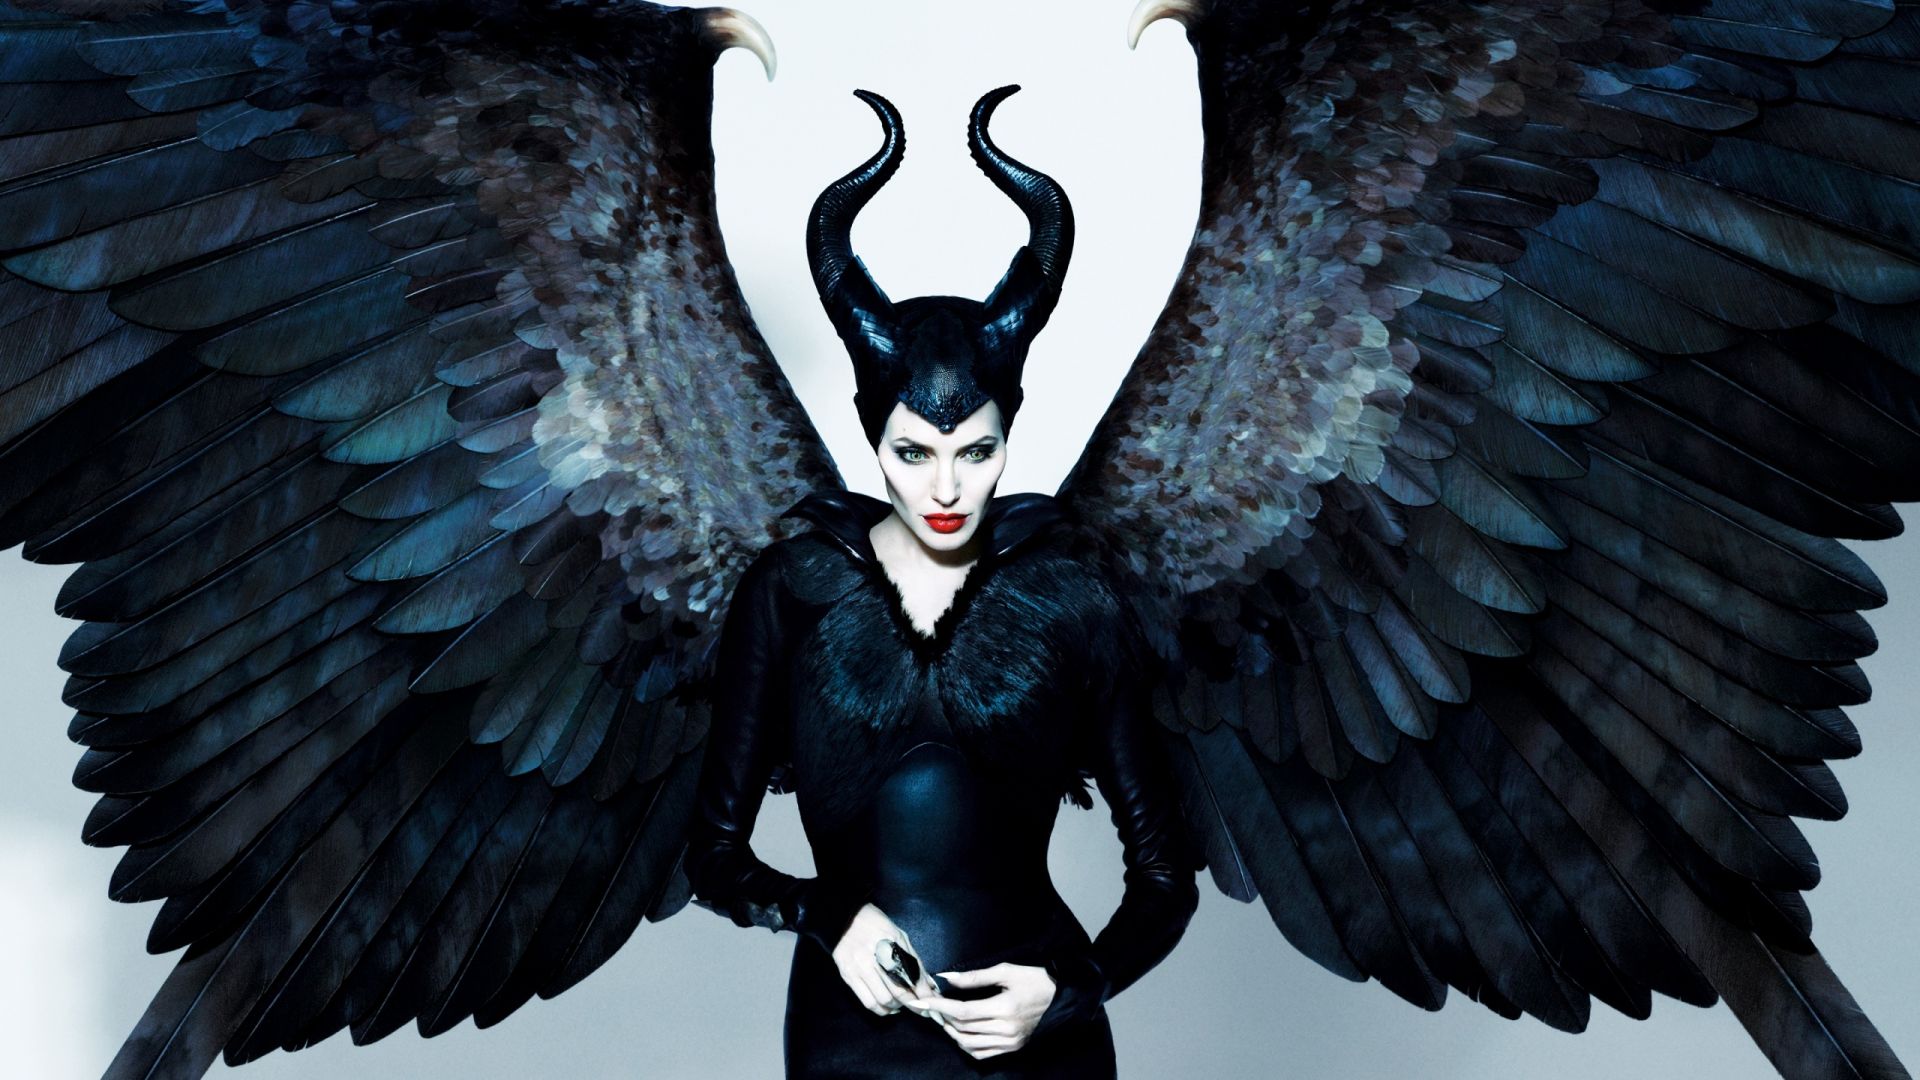 Wallpaper Angelina Jolie in maleficent 2014 movie